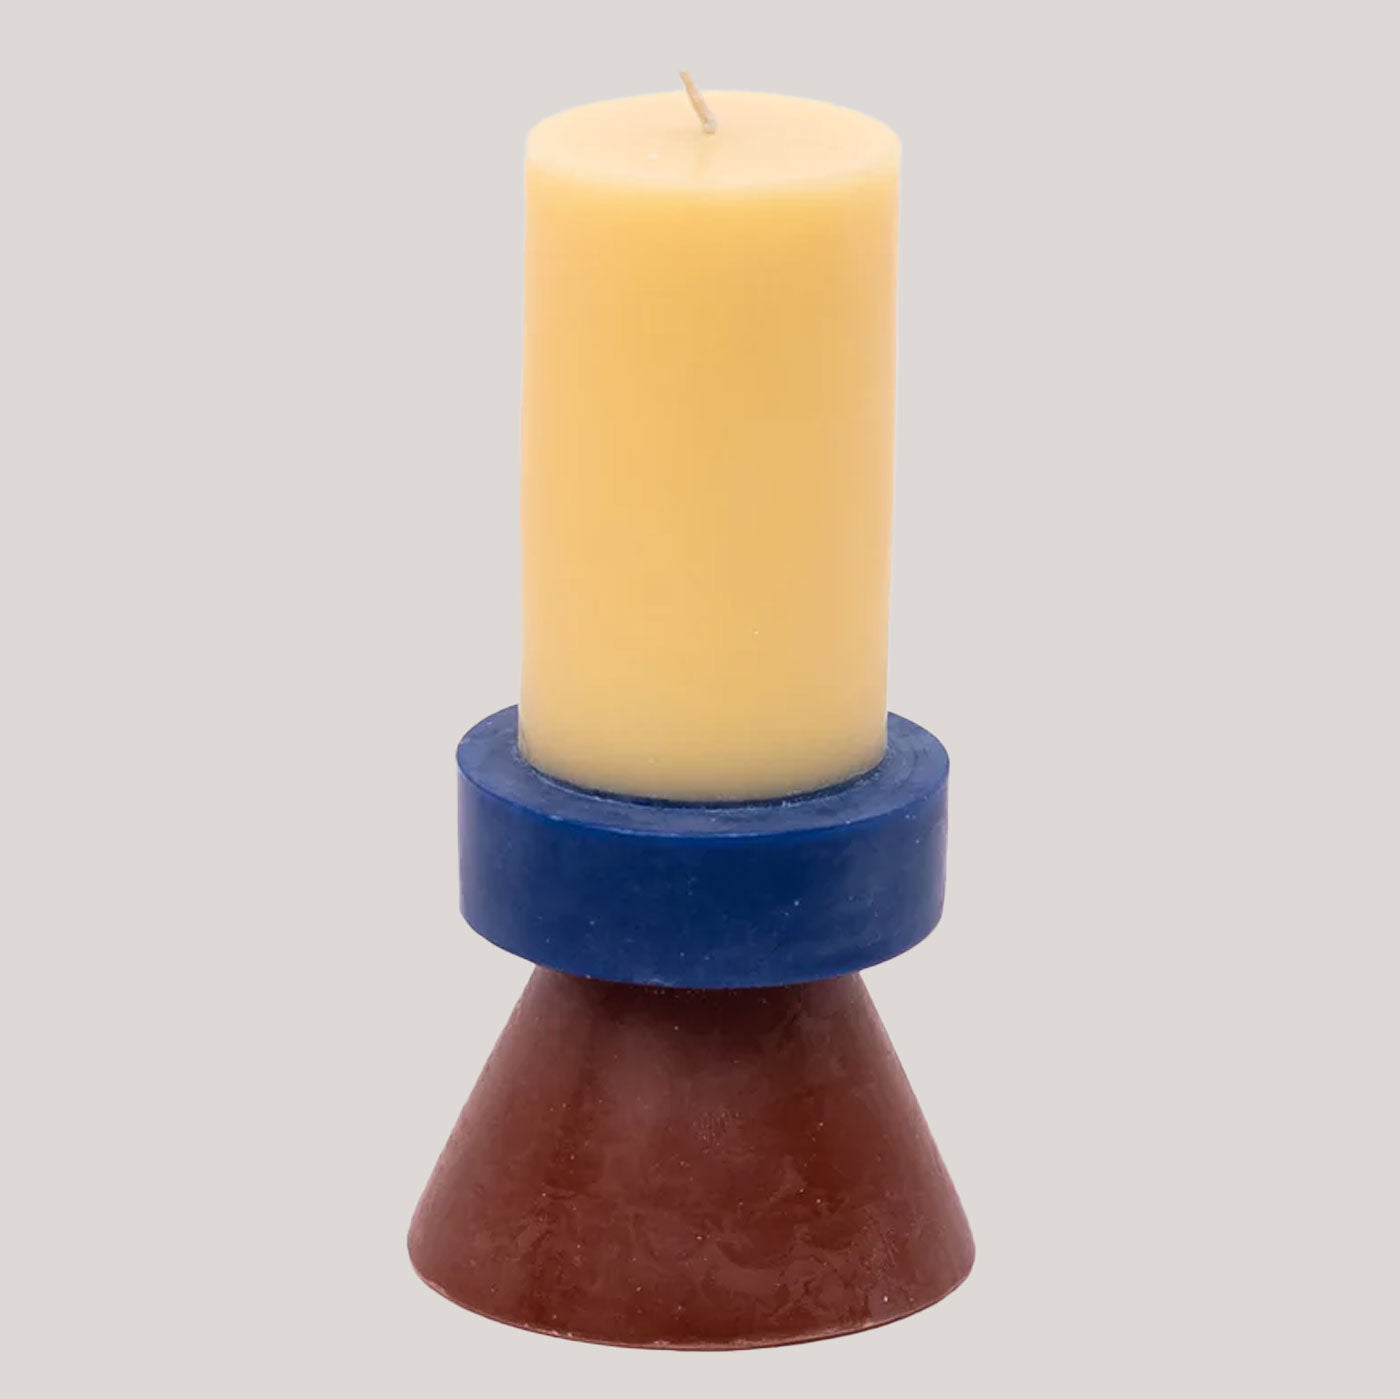 Yod & Co Stack Candle - Banana/Navy/Chocolate